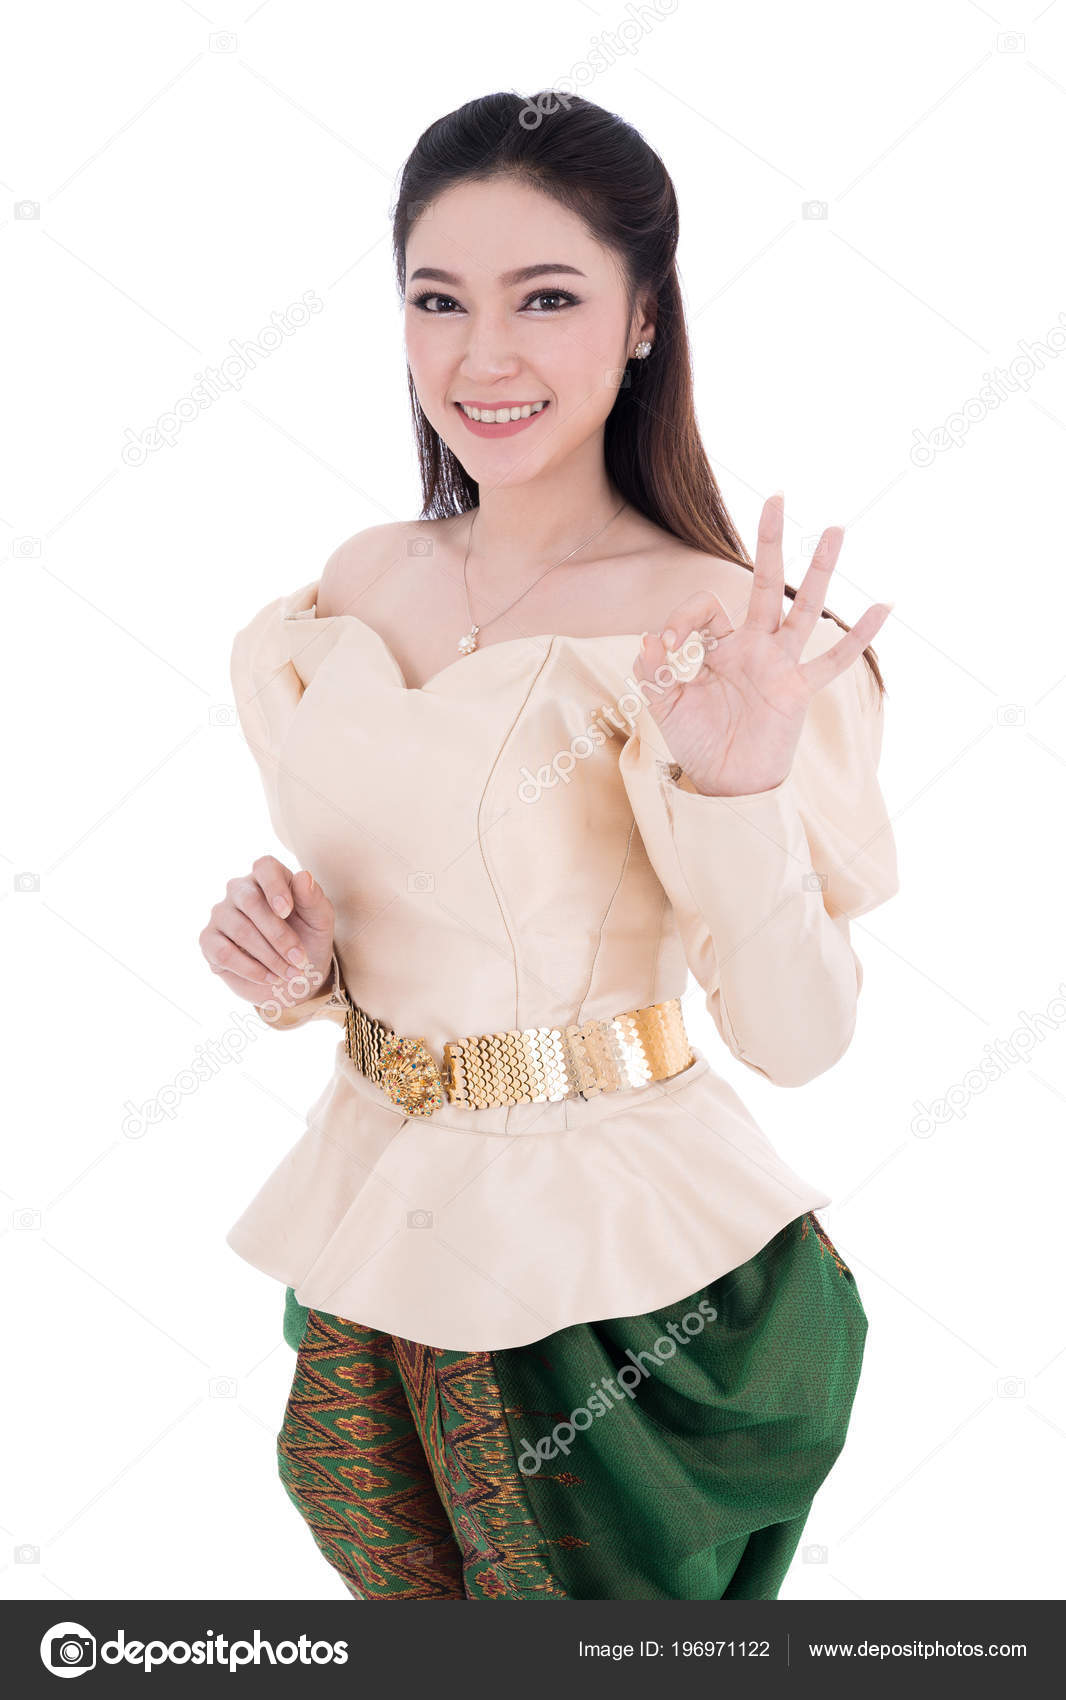 https://st4.depositphotos.com/1655708/19697/i/1600/depositphotos_196971122-stock-photo-beautiful-woman-thai-traditional-dress.jpg